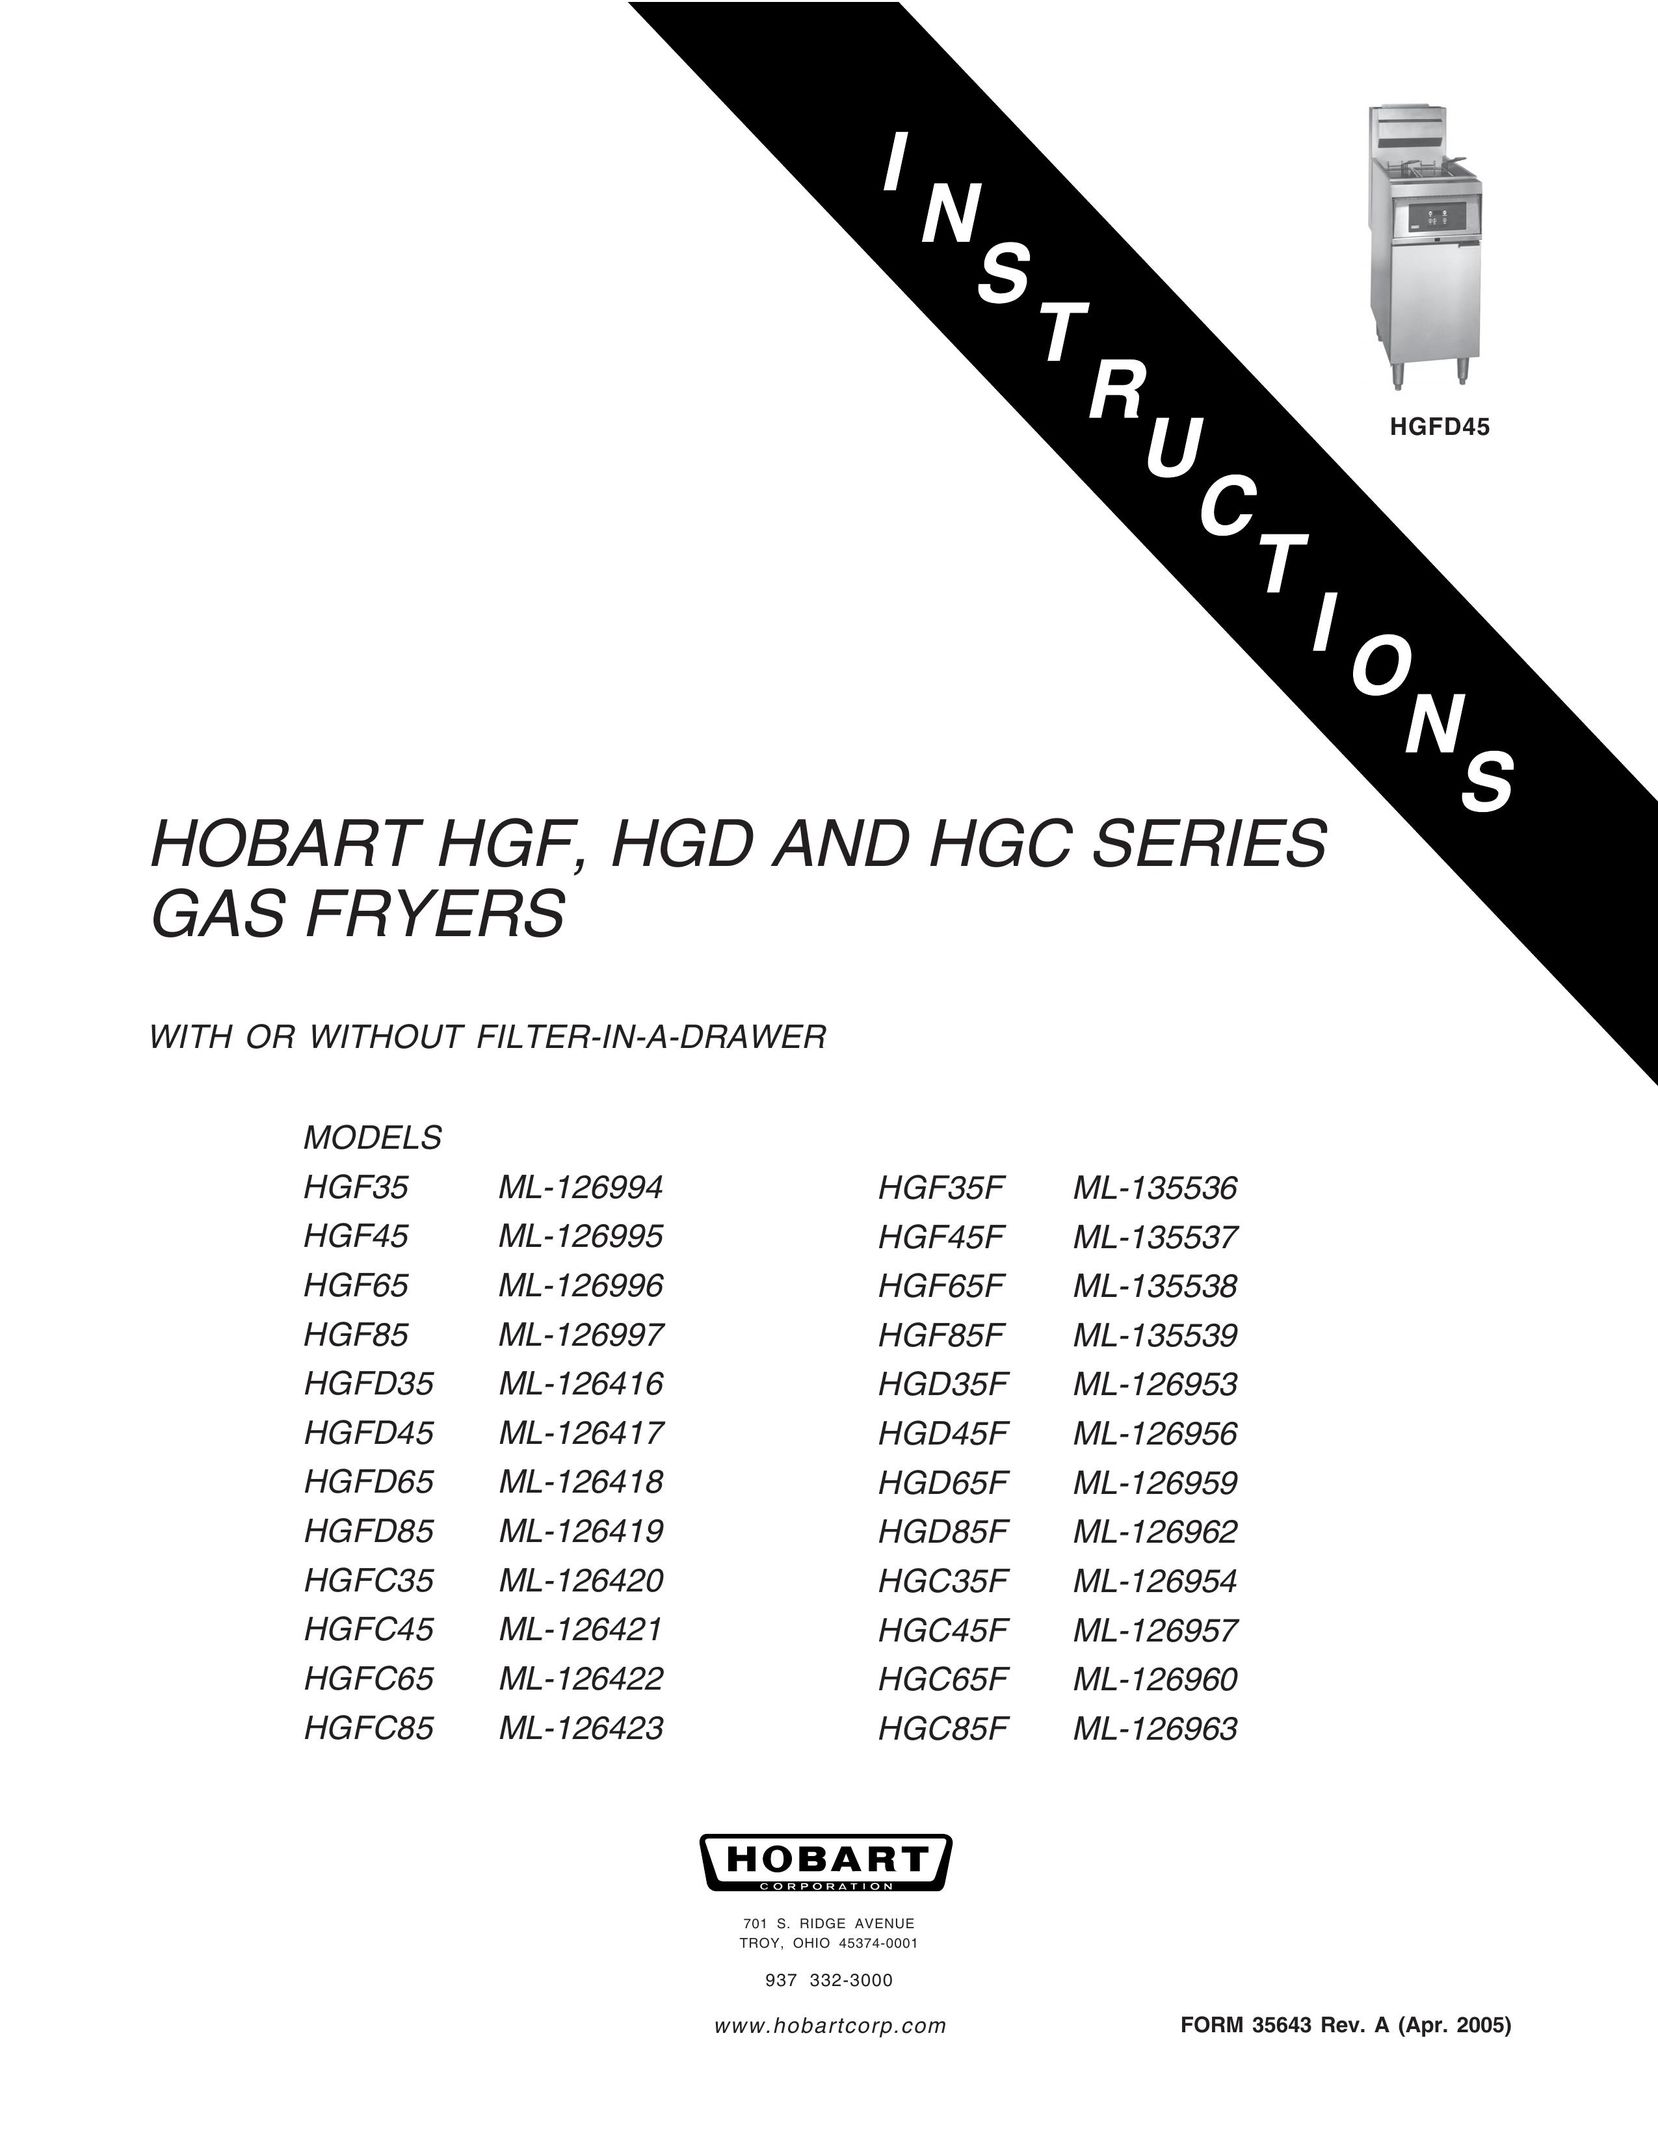 Hobart HGC45F ML-126957 Fryer User Manual